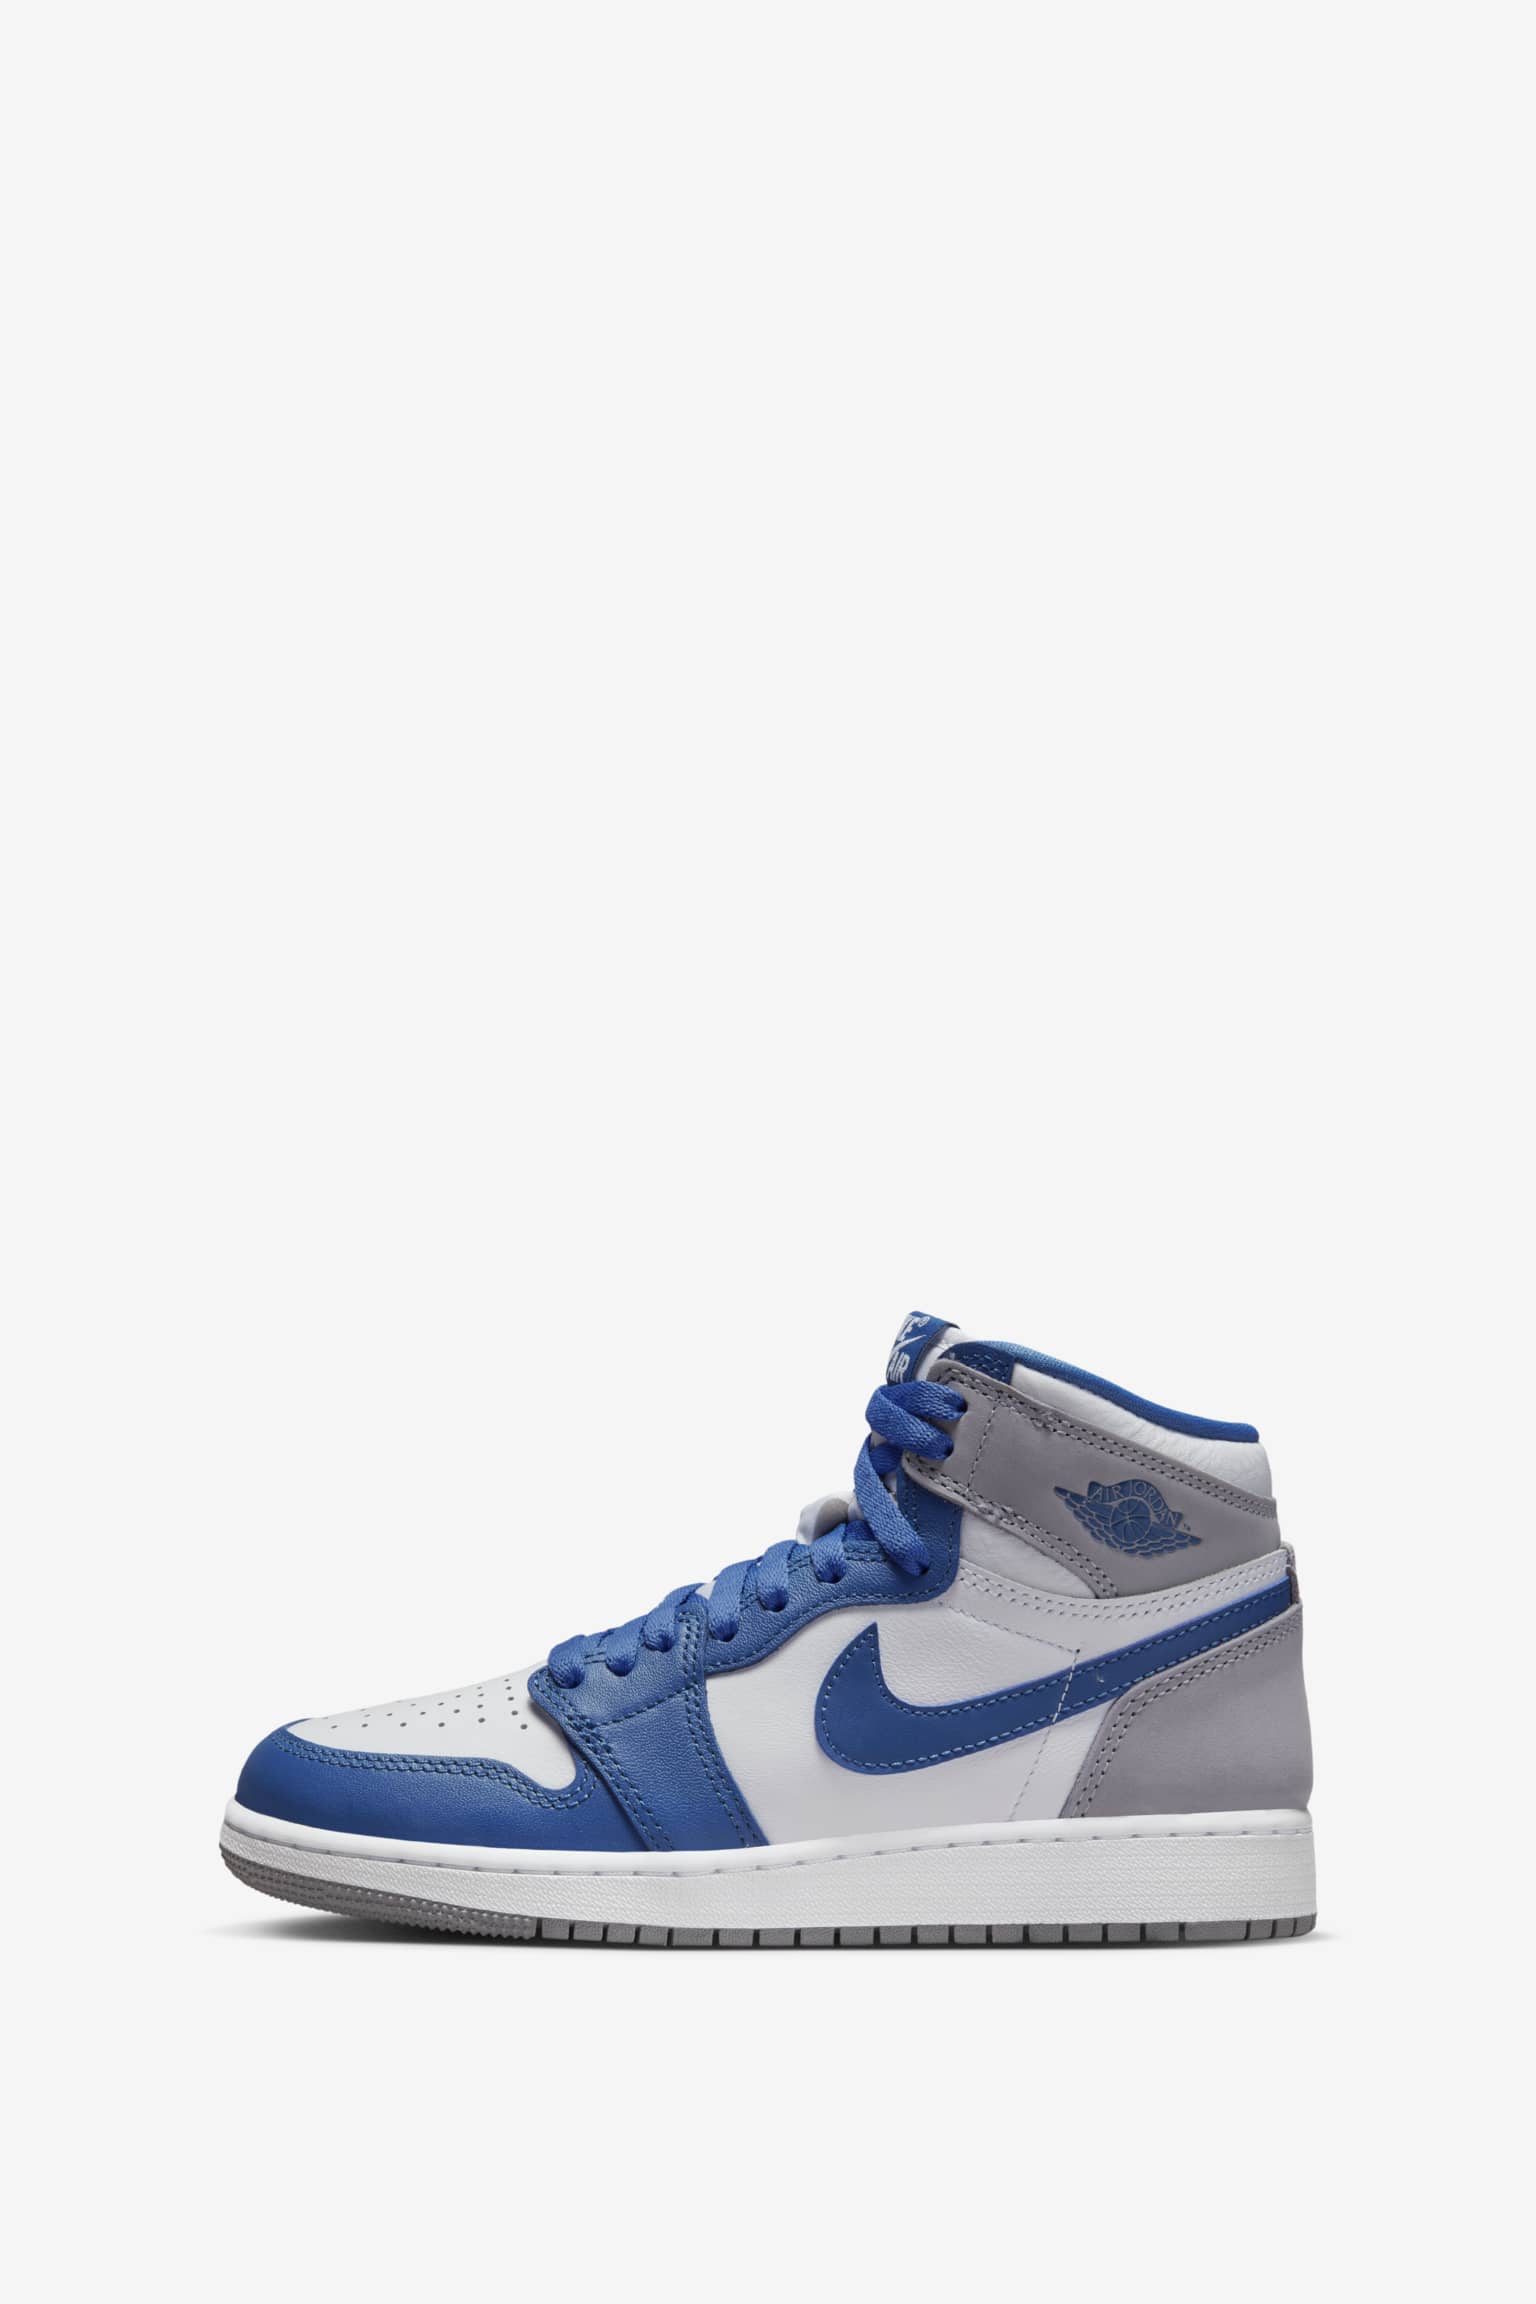 Air Jordan 1 'True Blue' (DZ5485-410) Release Date. Nike SNKRS IN